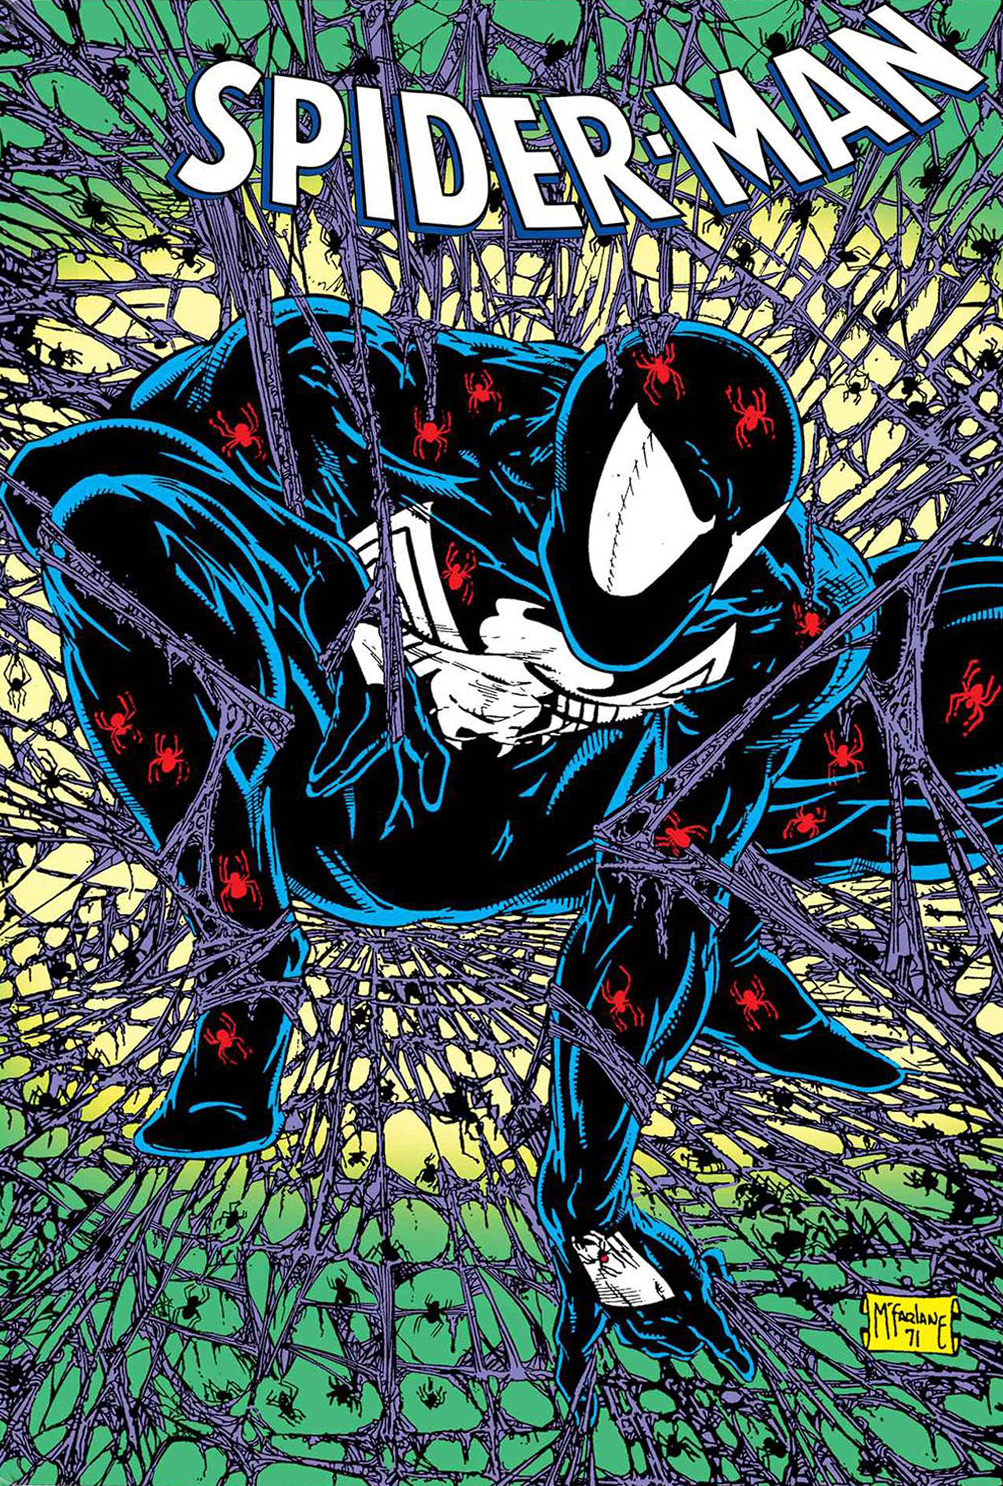 Spider-Man by Todd McFarlane Omnibus HC Black Costume Cover